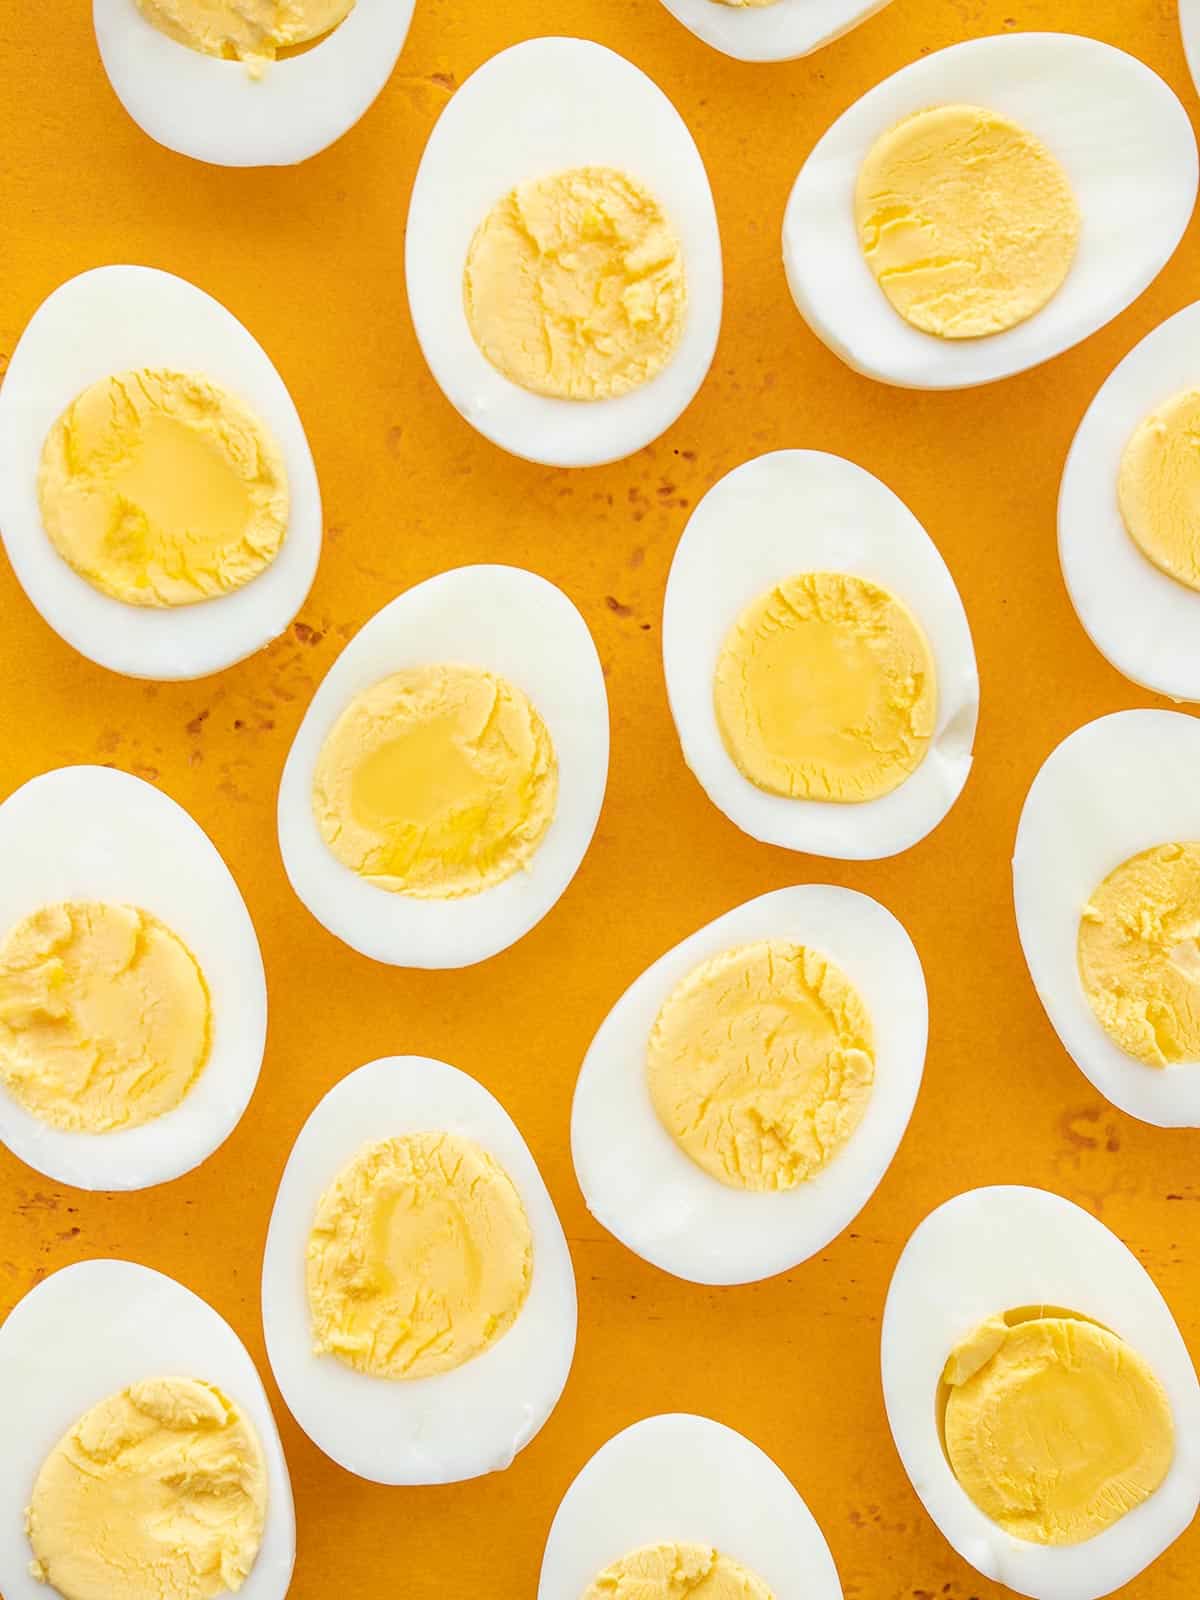 How to Make Hard Boiled Eggs | Budget Bytes | Bloglovin’